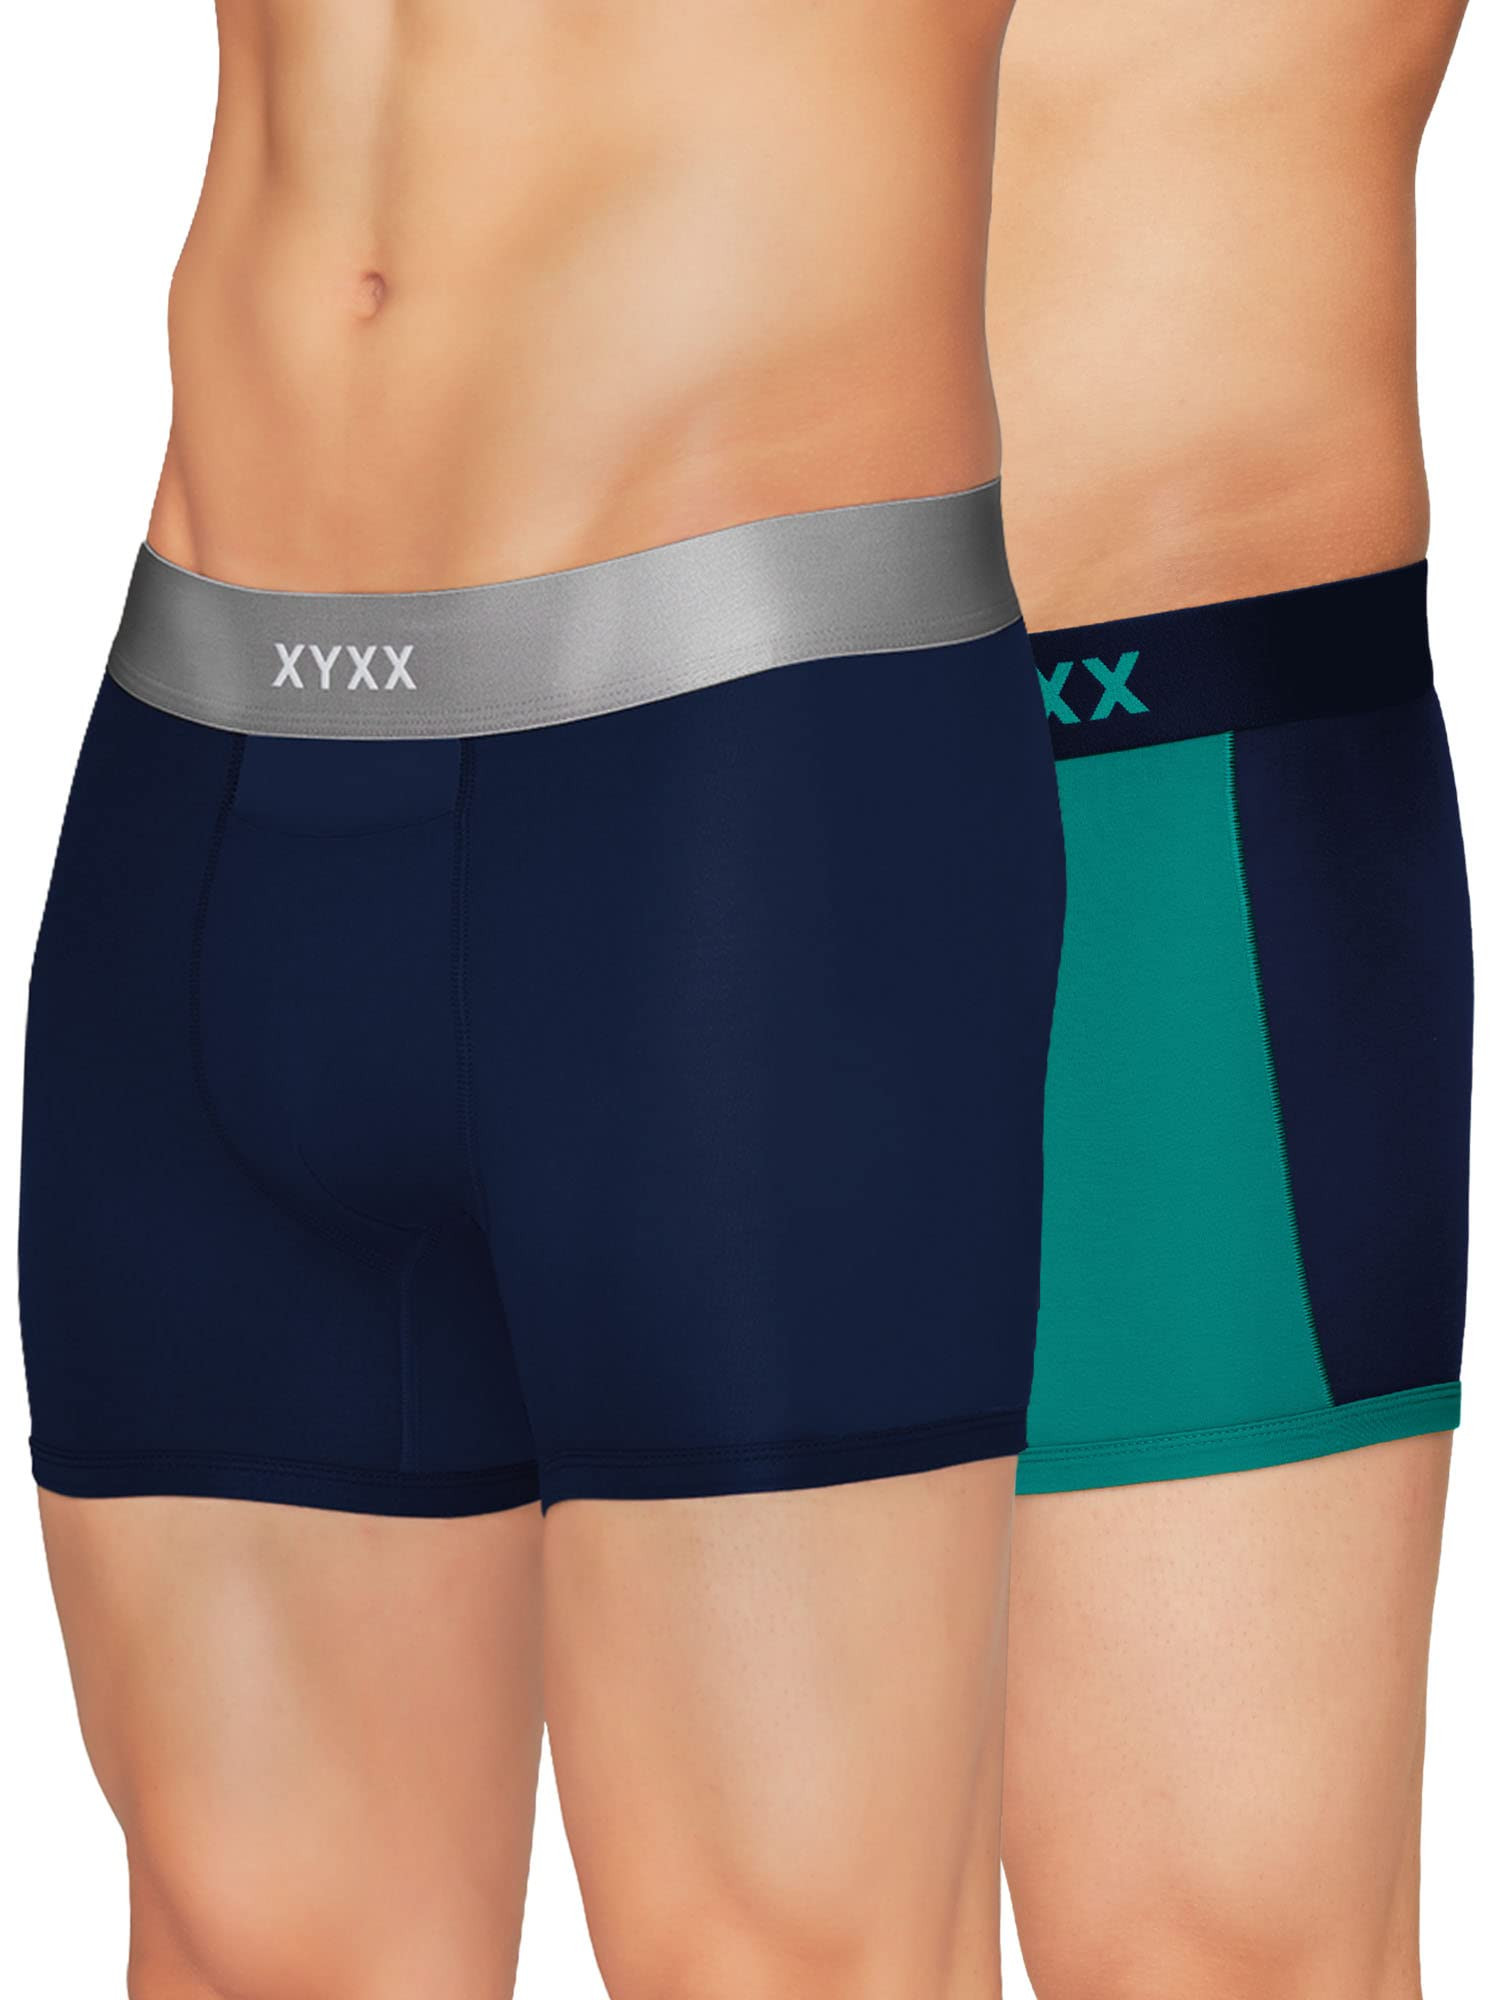 XYXX Men's Underwear Dualist IntelliSoft Antimicrobial Micro Modal Trunk  Pack of 2 (Navigate & Black Iris ;